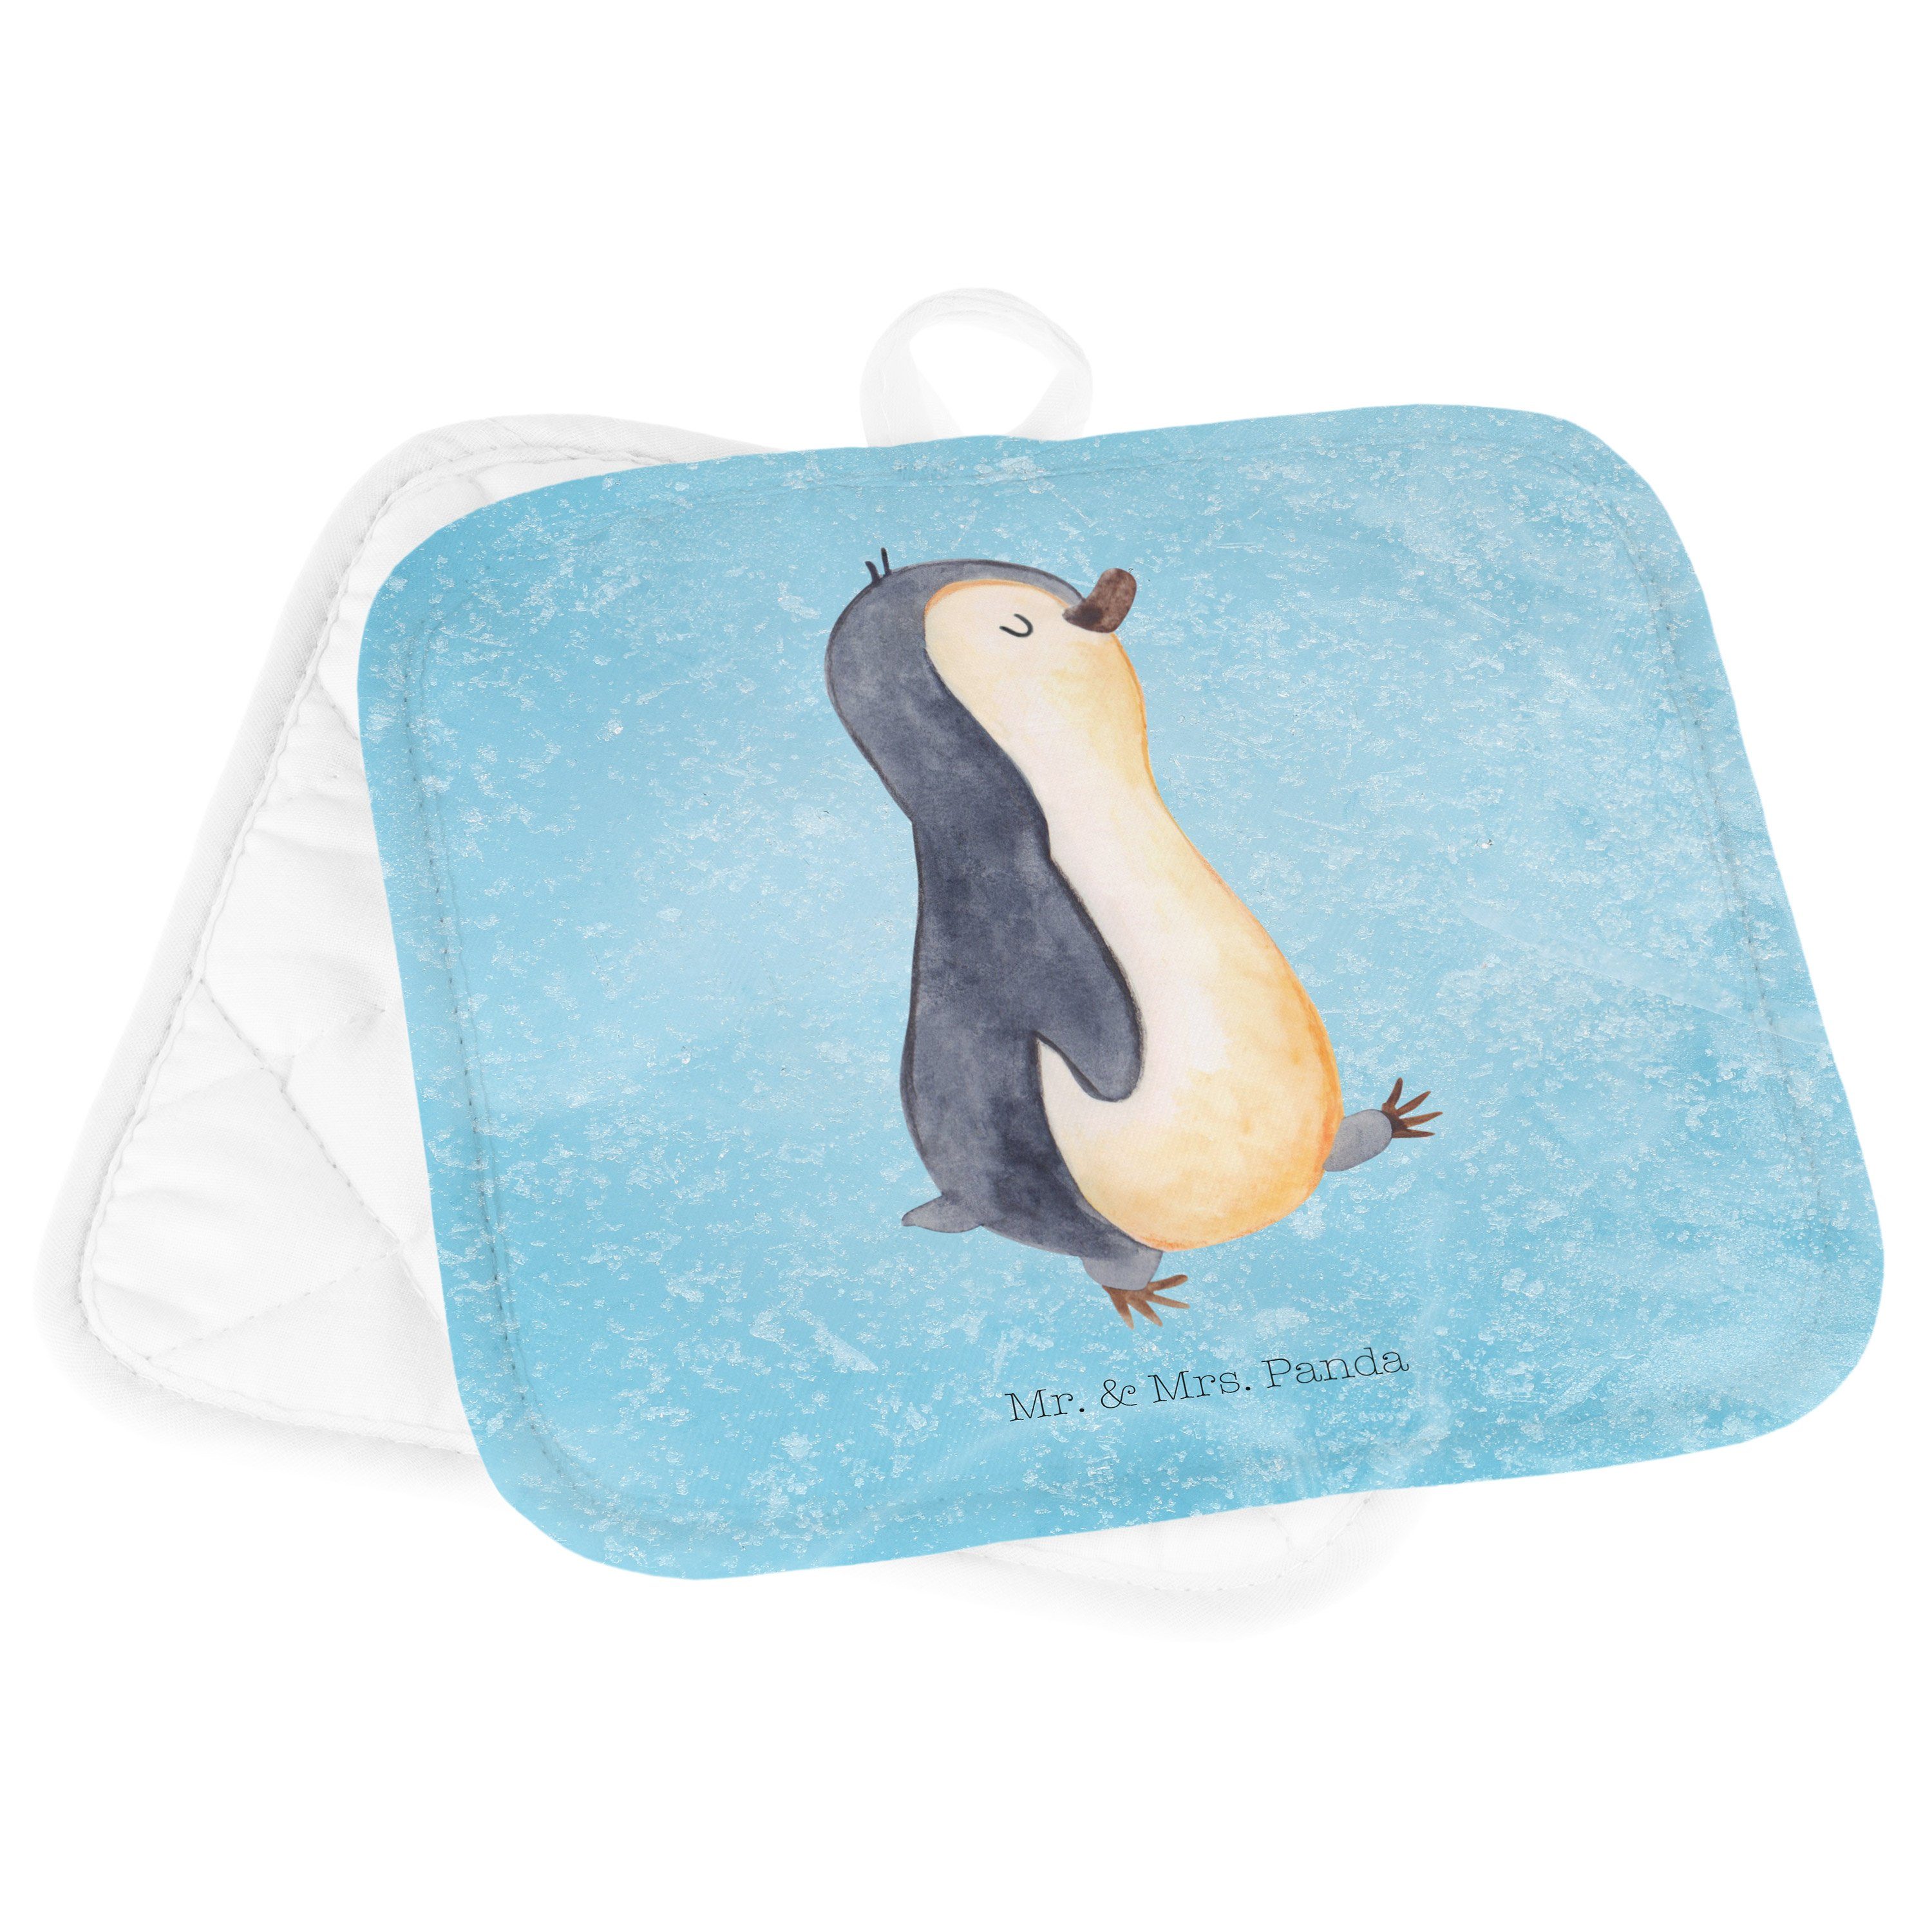 Pinguin - Langschläfer, Topflappen Mrs. & Panda Mr. (1-tlg) Geschenk, Eisblau - marschierend Ofenhandschu,